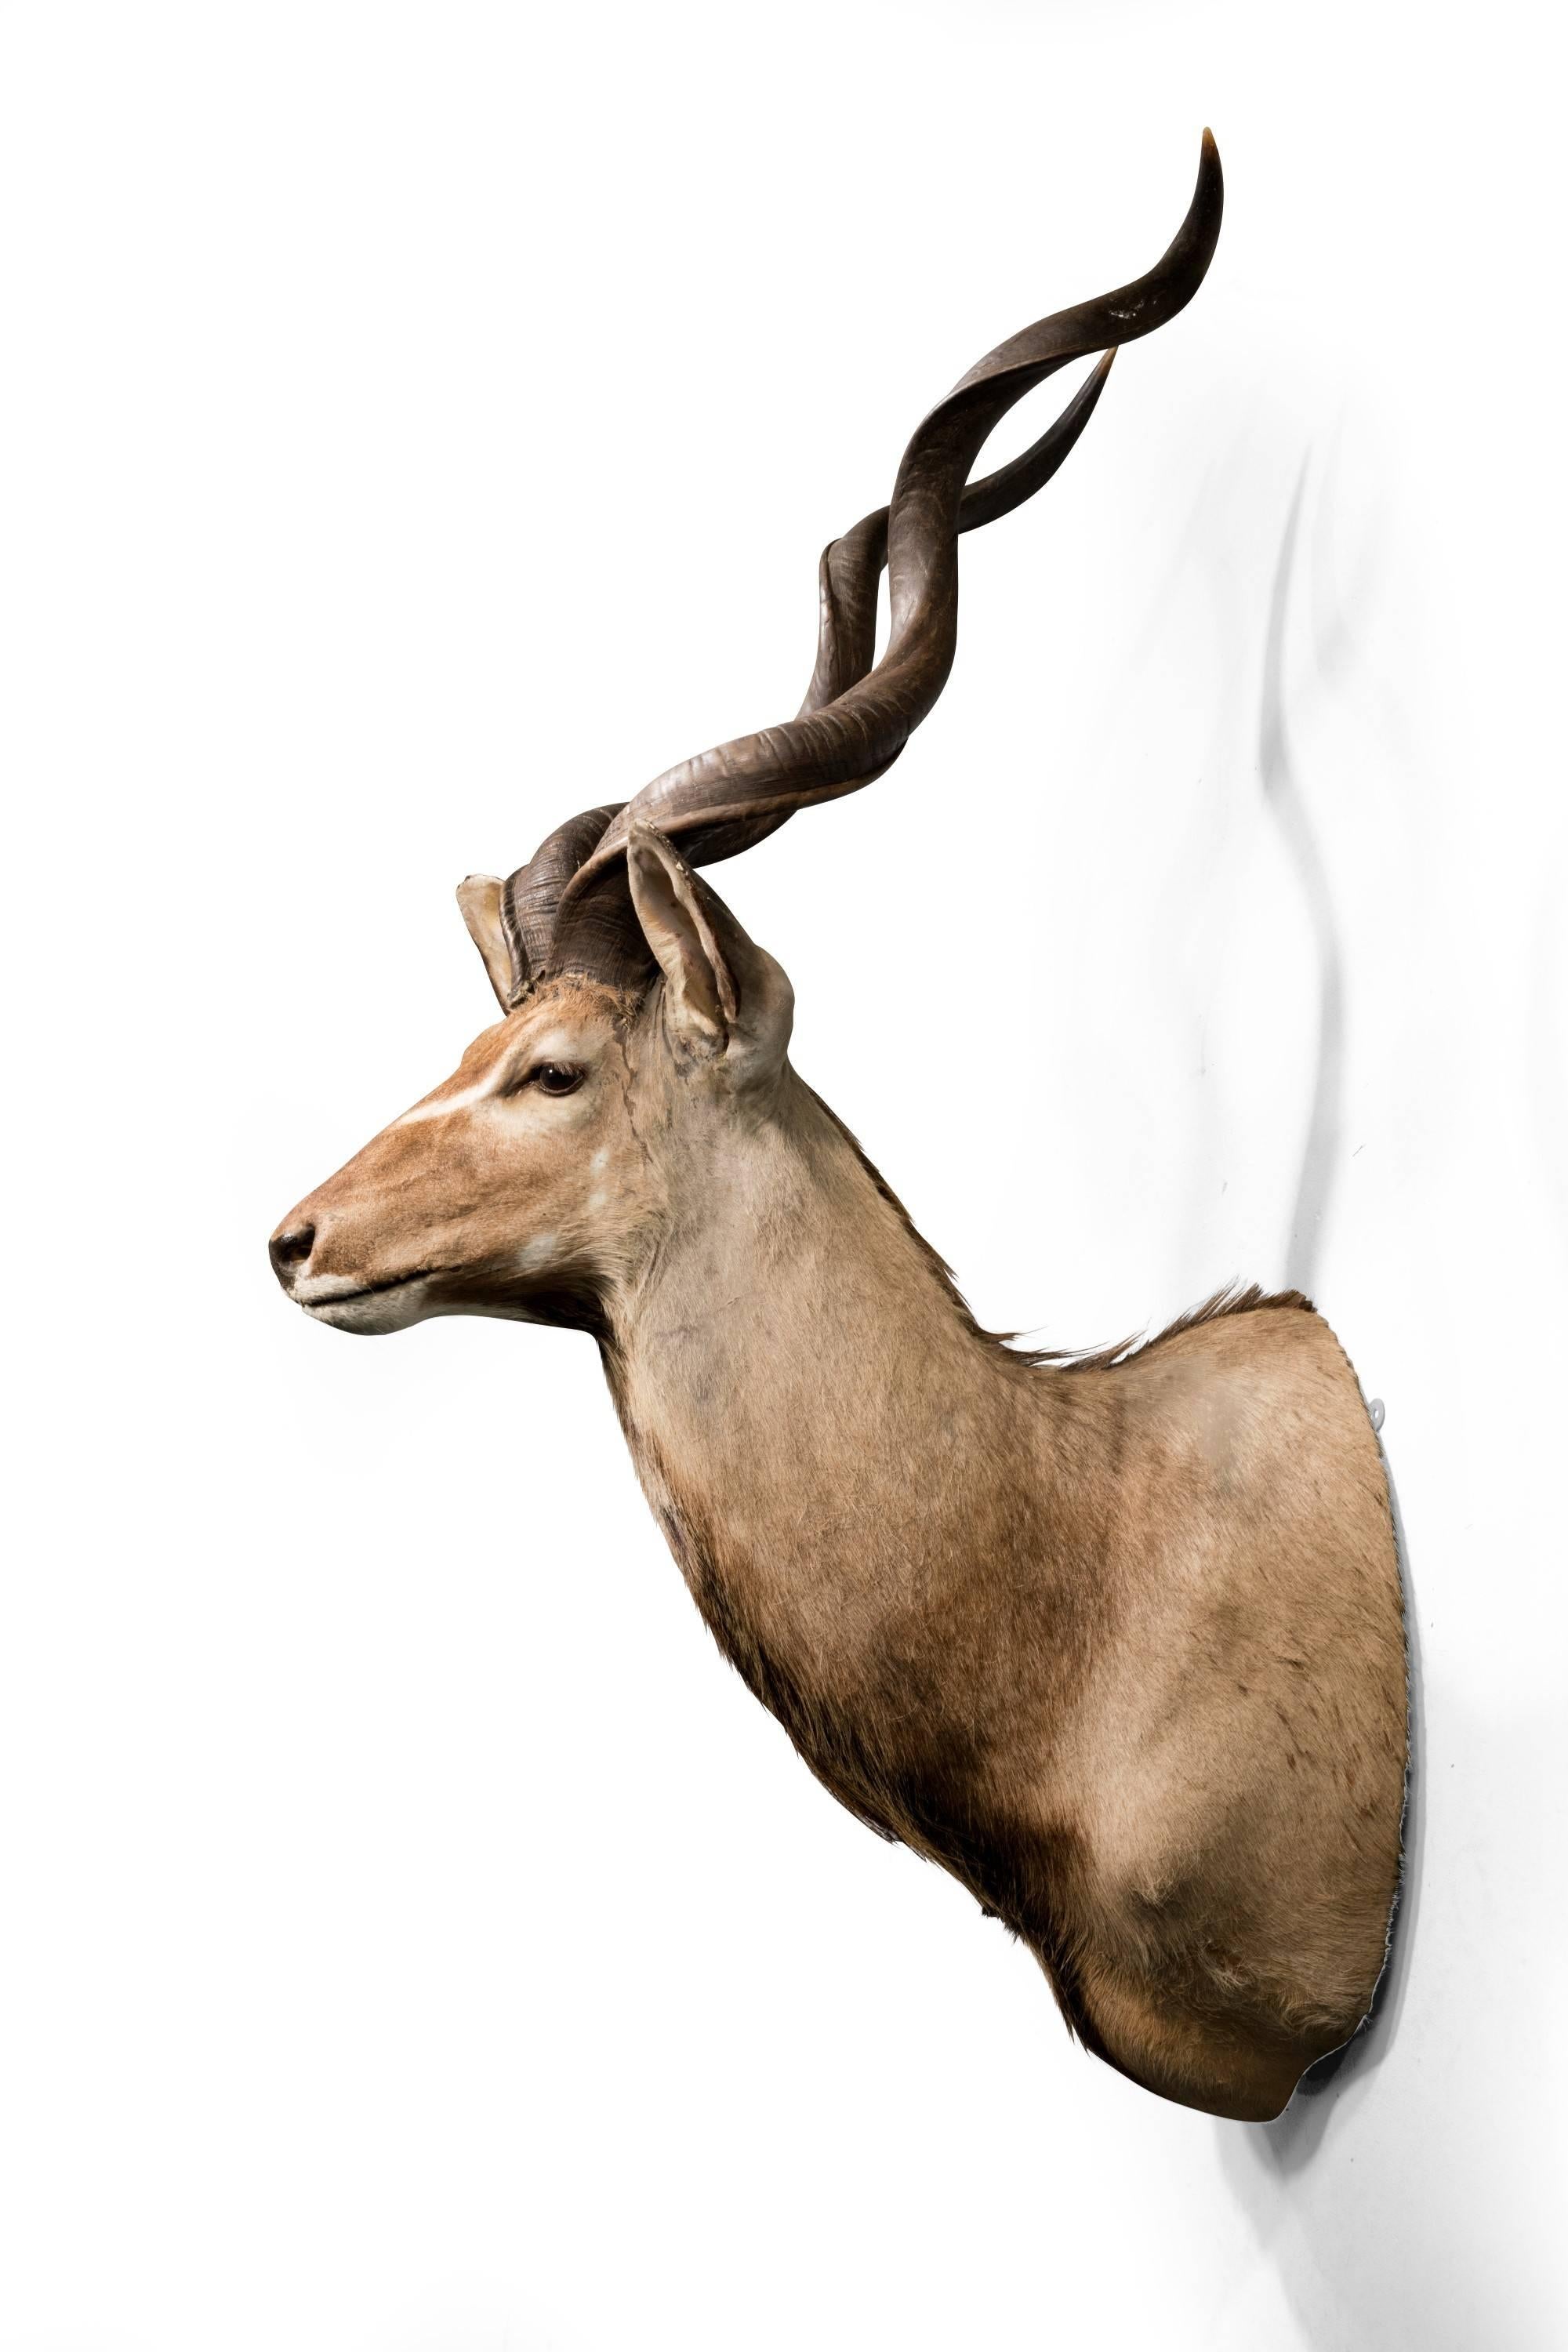 blackbuck antelope mount